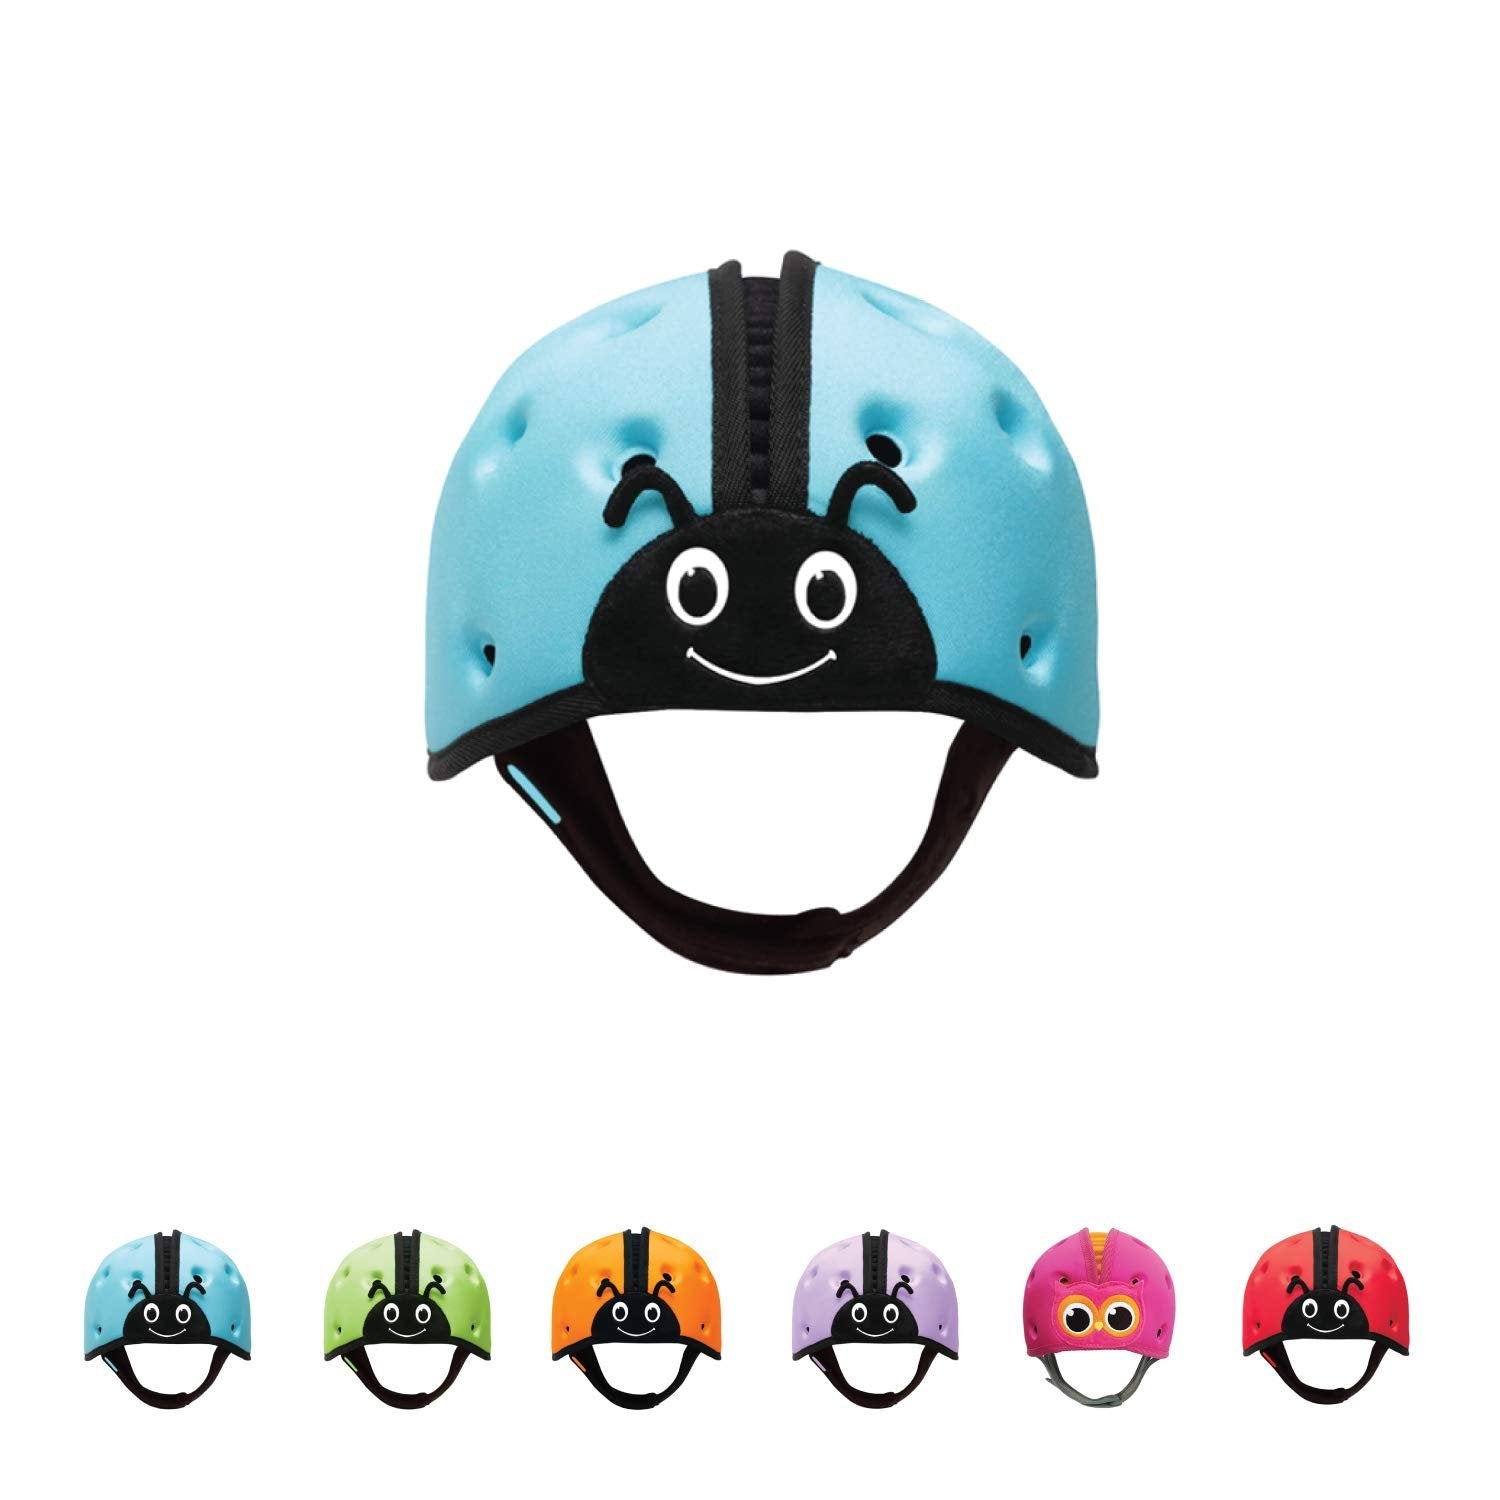 SafeheadBABY Infant Safety Helmet Ladybird Blue Size 1, Crawling Walking Protection, Ultra-Lightweight